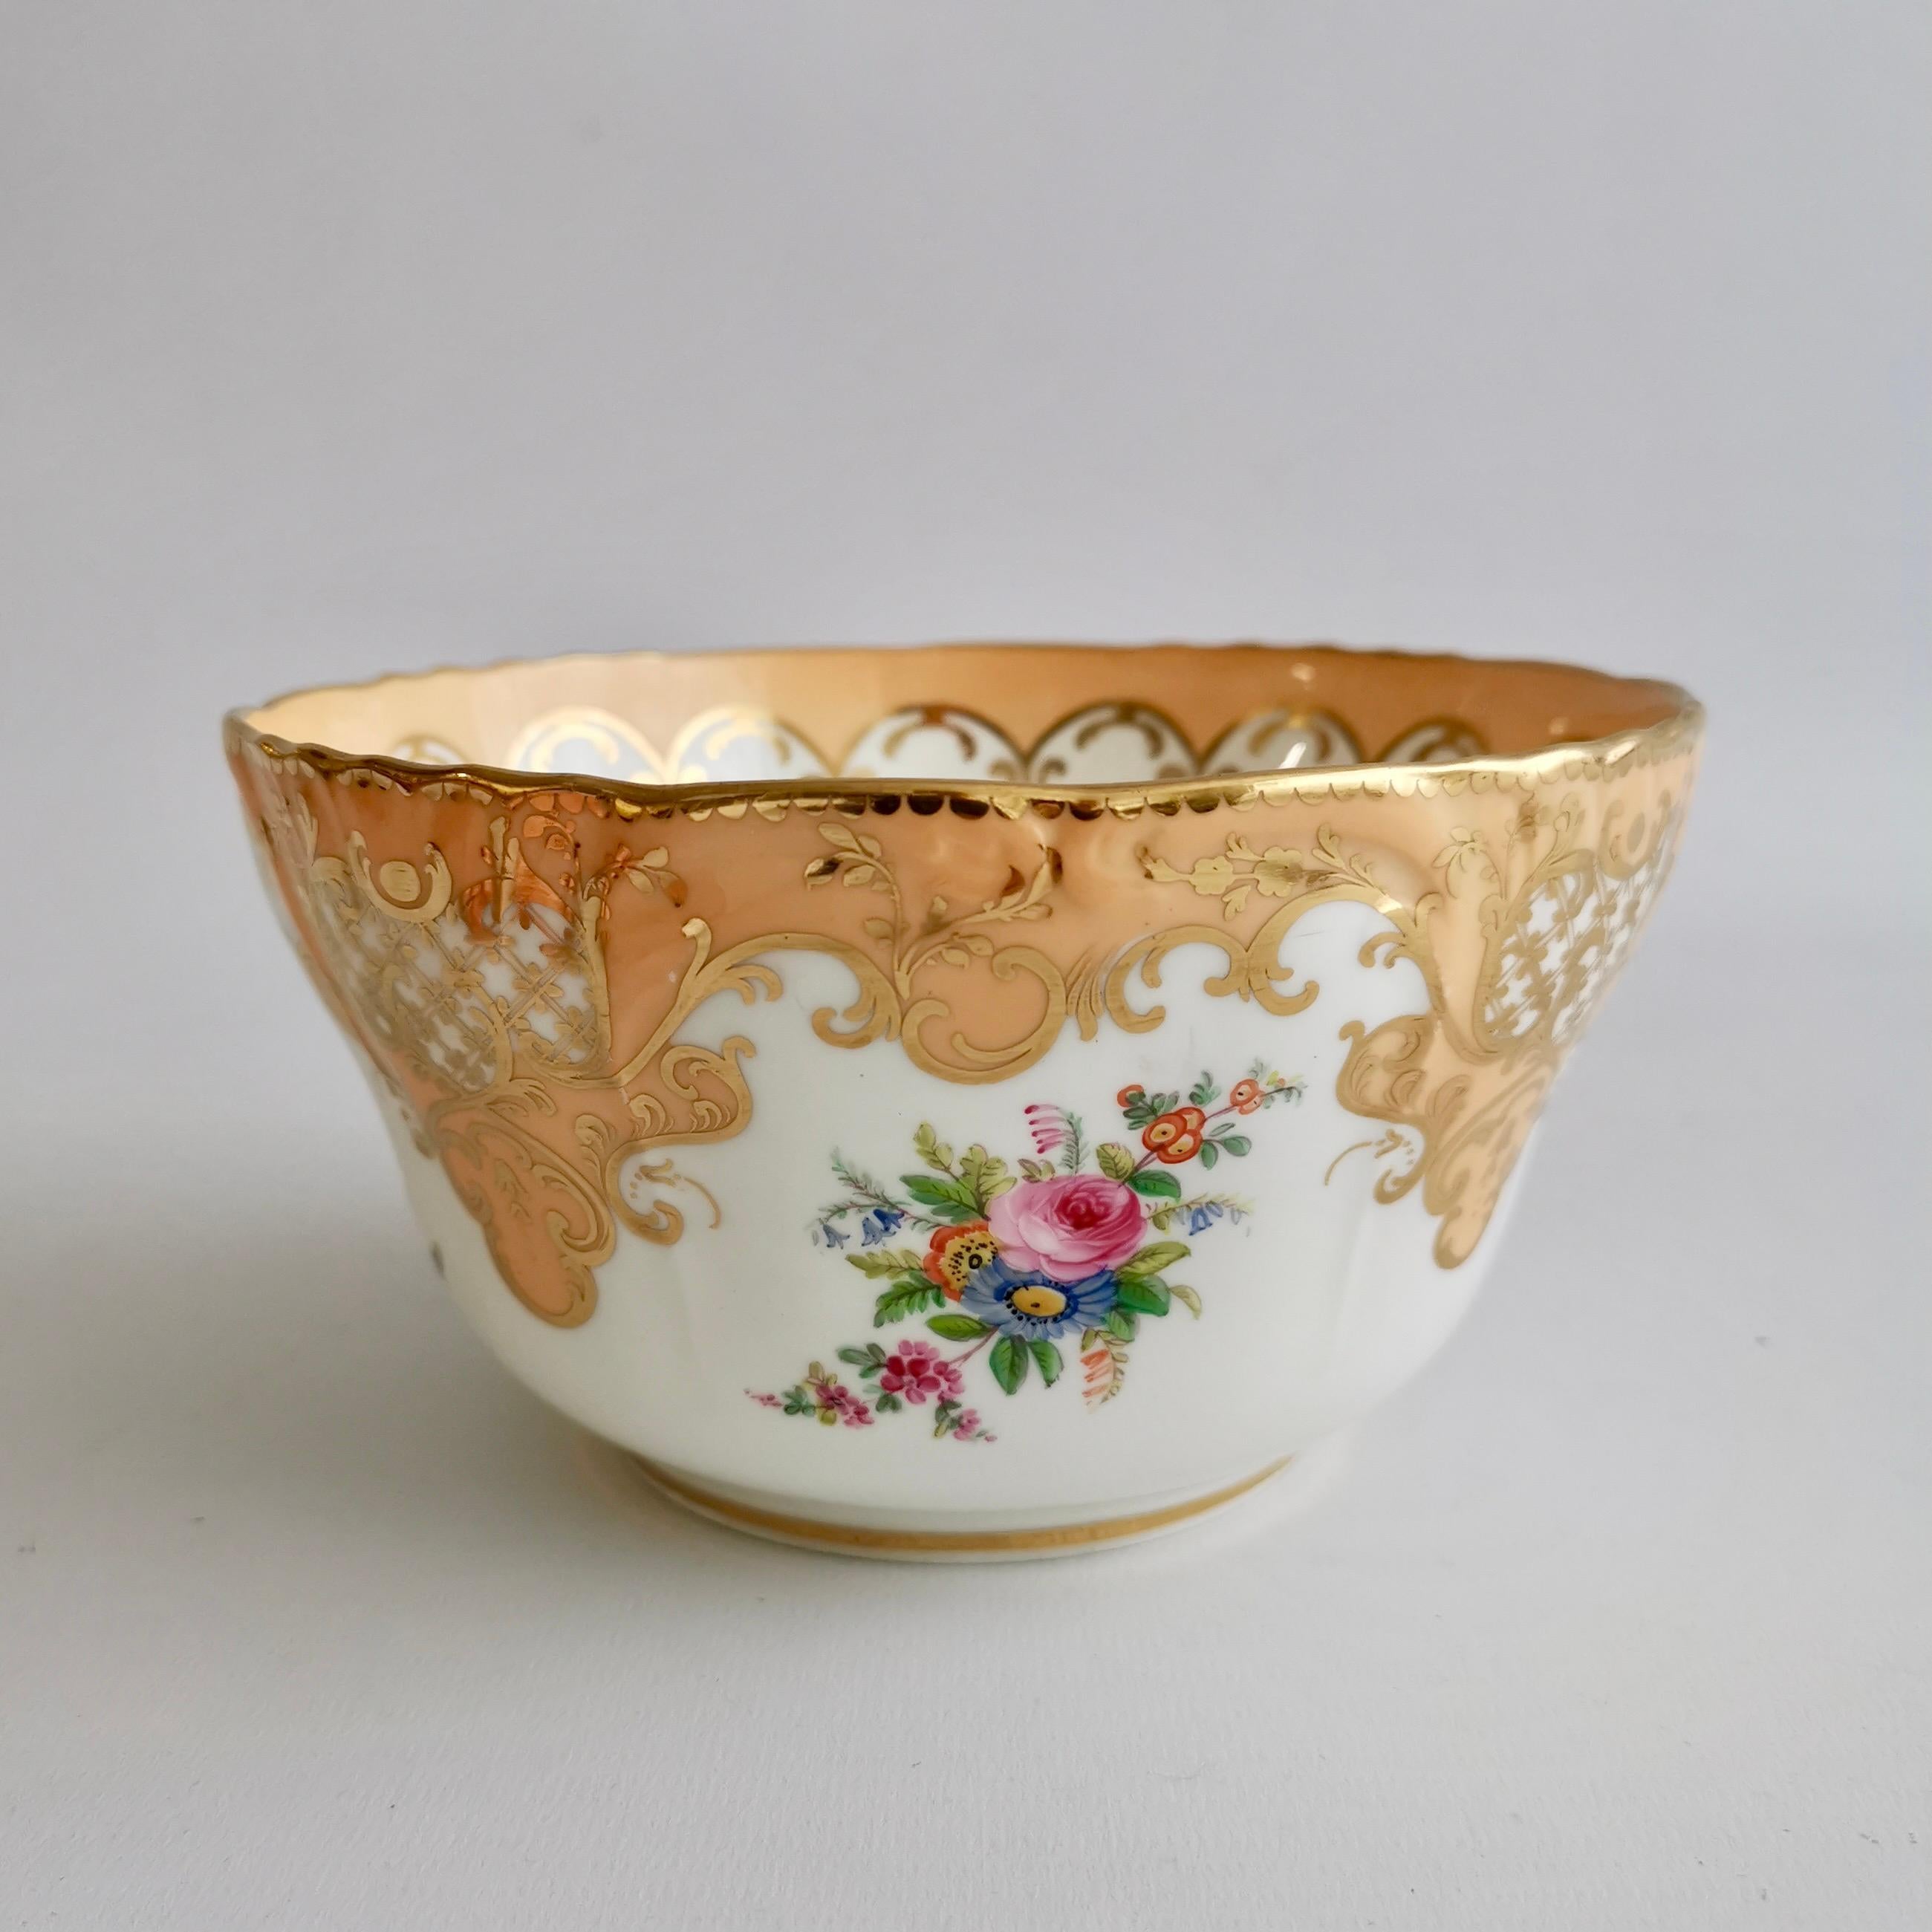 Hand-Painted Minton Porcelain Slop Bowl, Apricot Orange Ground, Gilt and Flowers, ca 1845